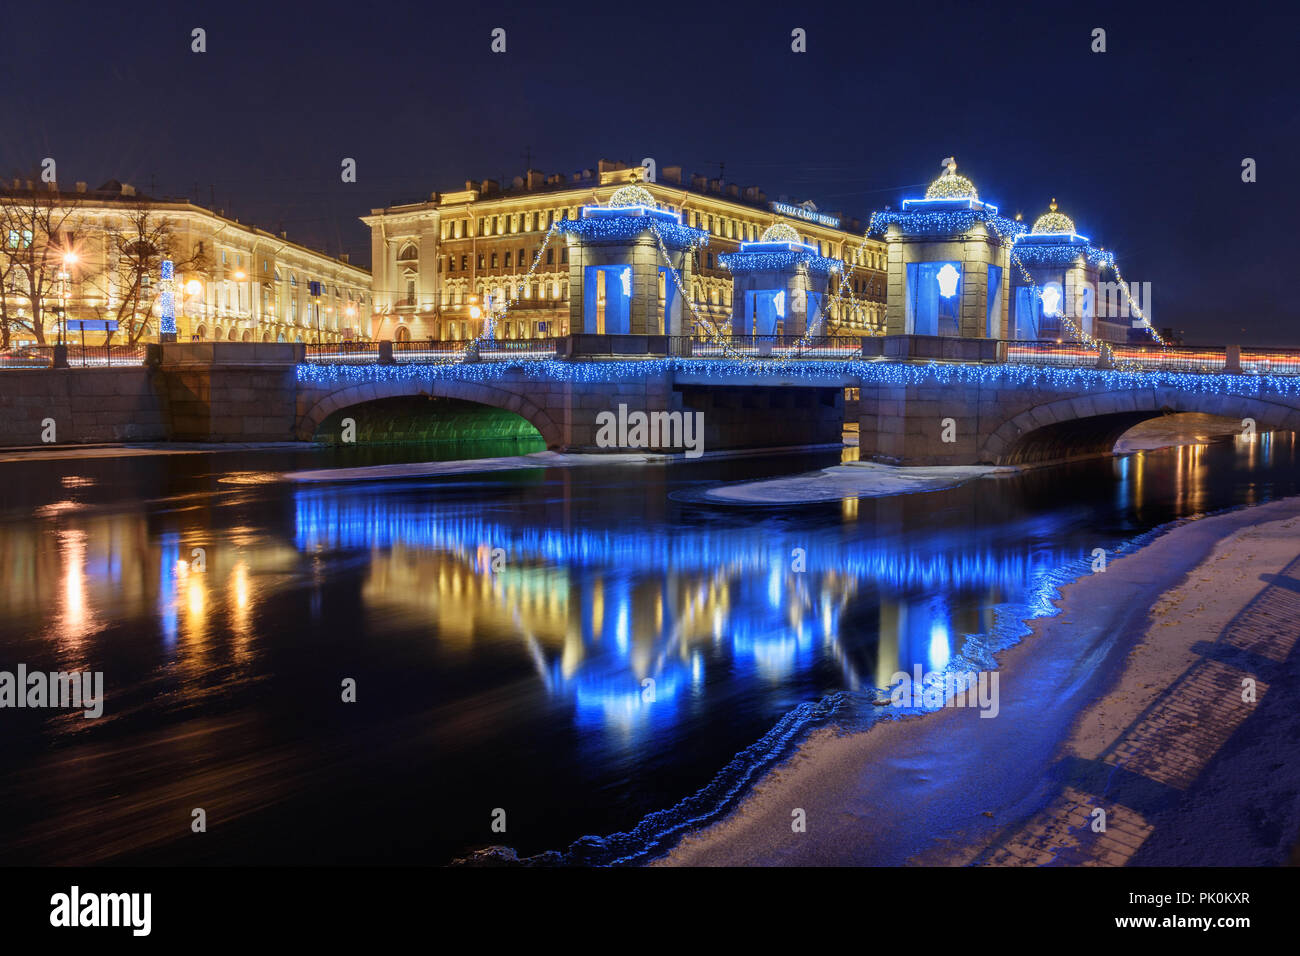 Lomonosov Bridge at night. New Year and Christmas illumunated. Saint Petersburg, Russia Stock Photo